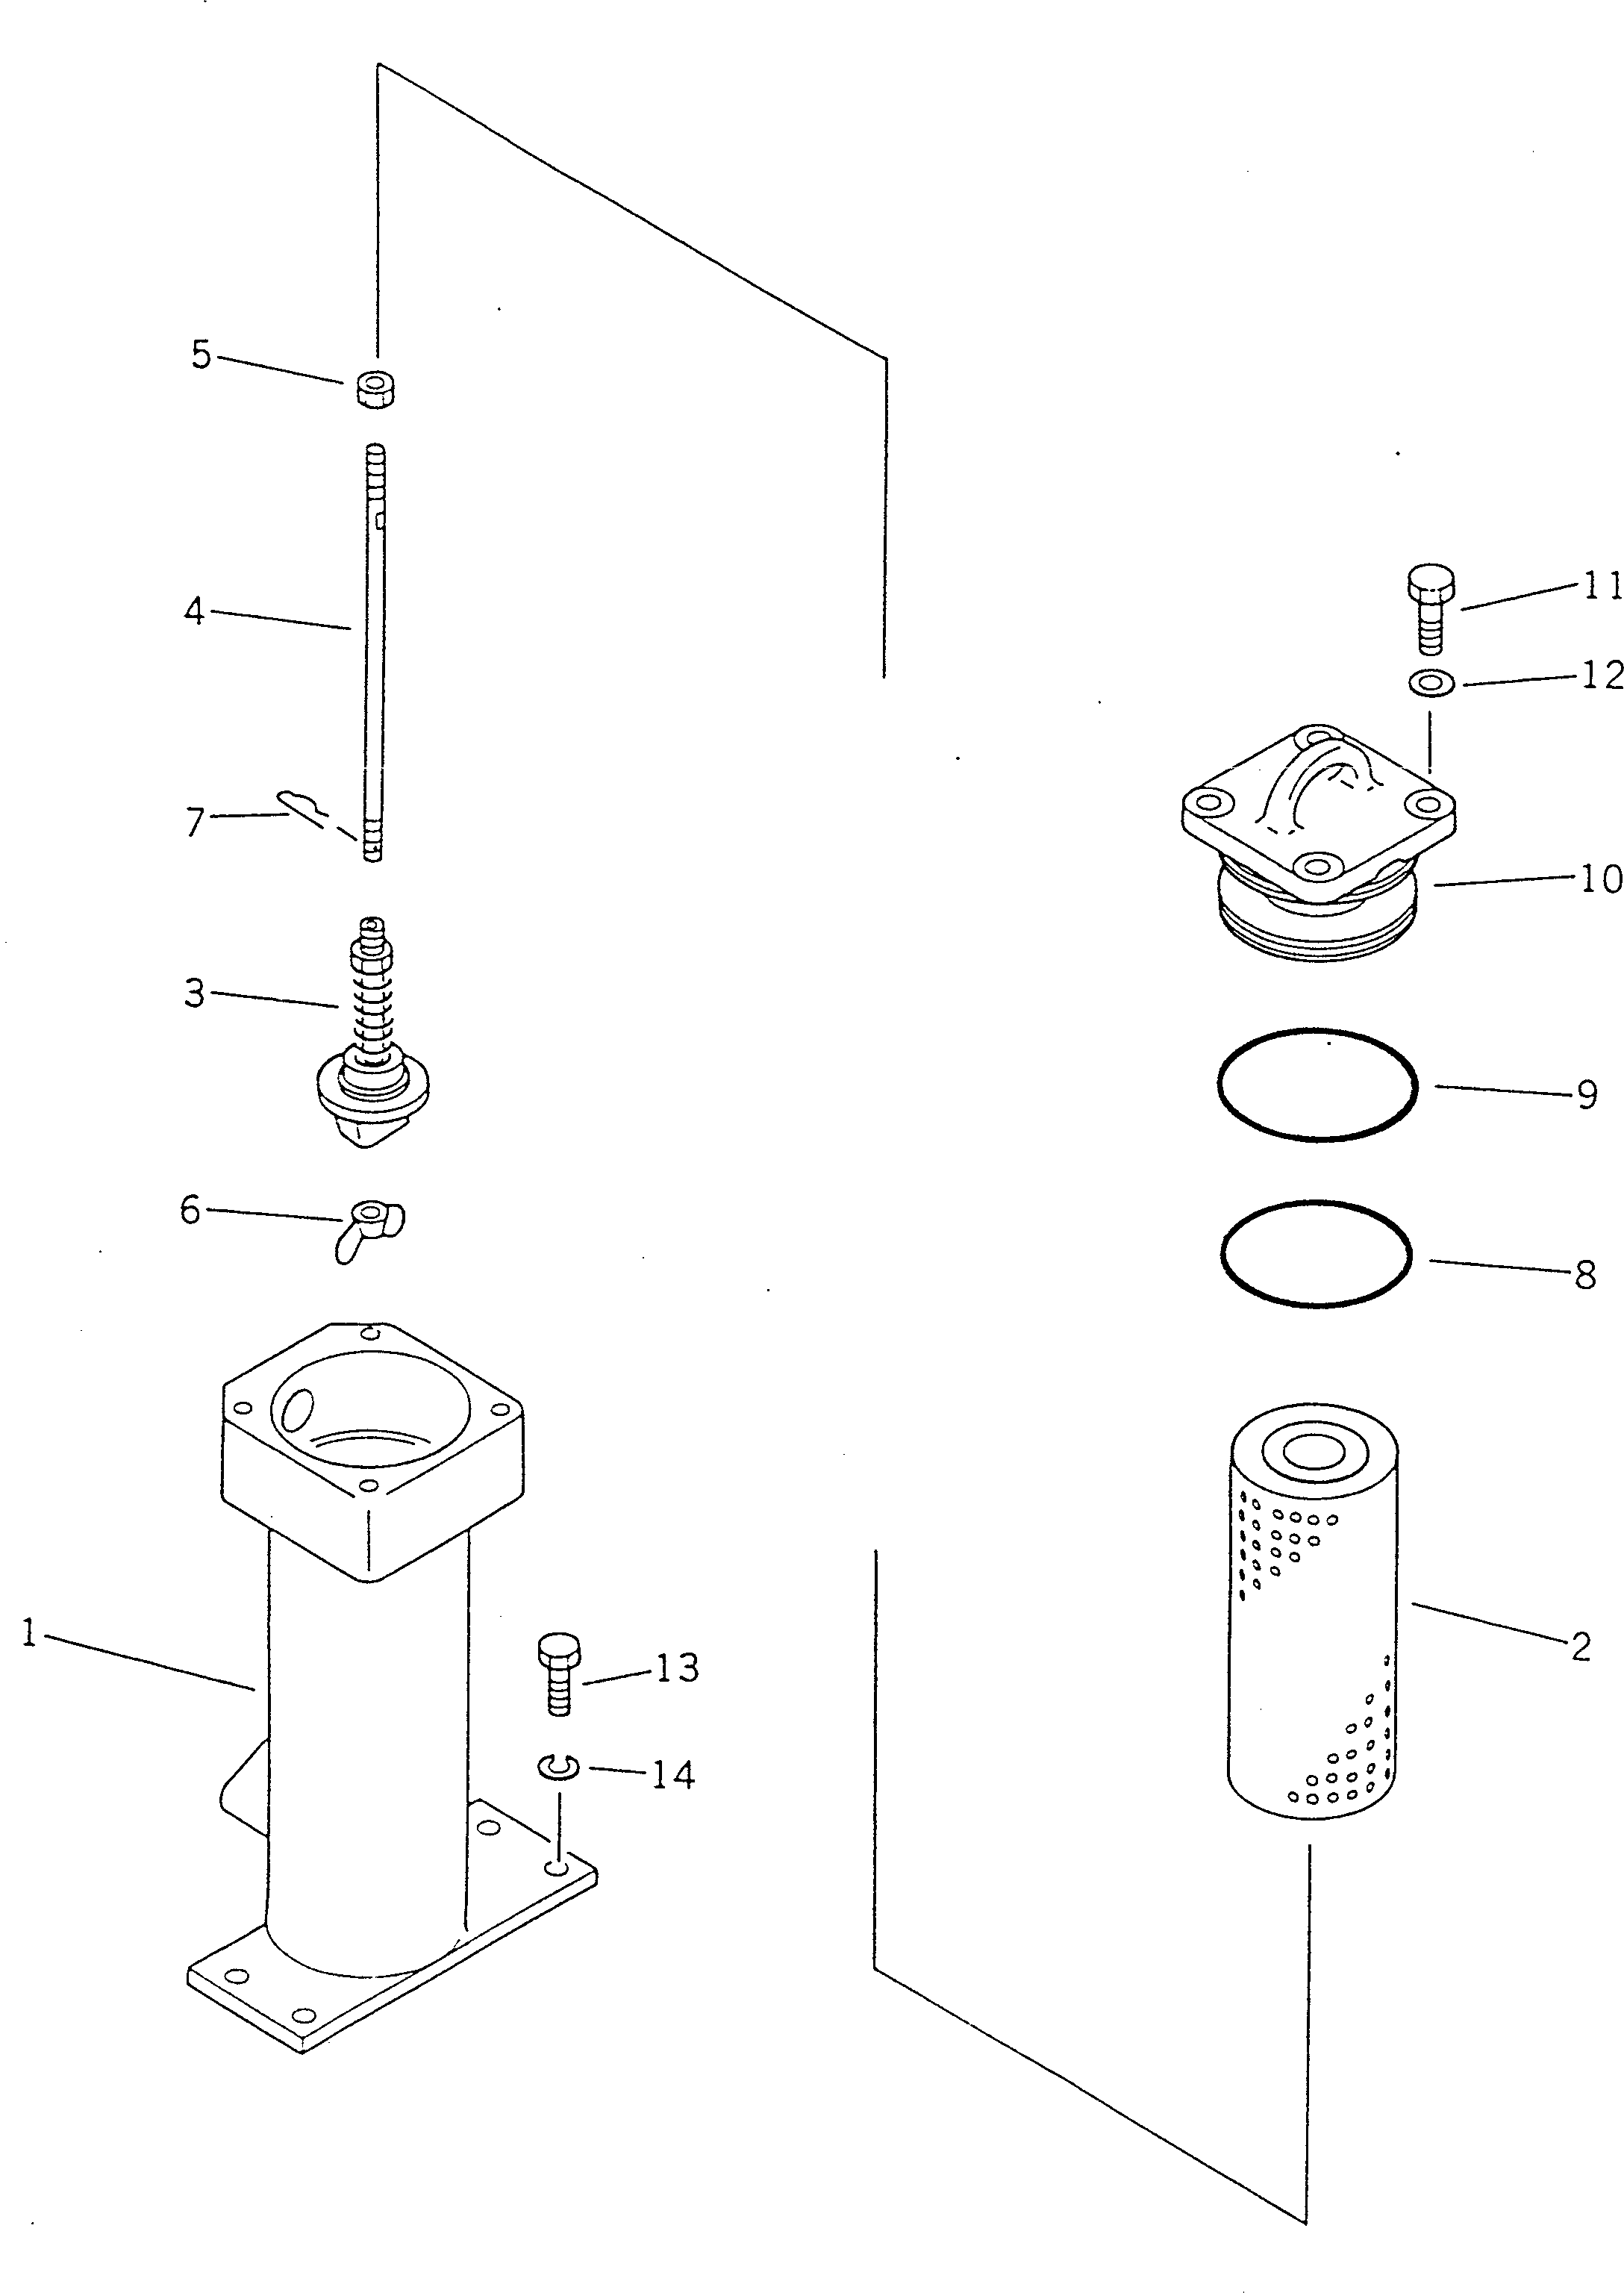 190. TRANSMISSION OIL FILTER [4603] - Komatsu part D355A-5 S/N 12622-UP [d355a-5c]